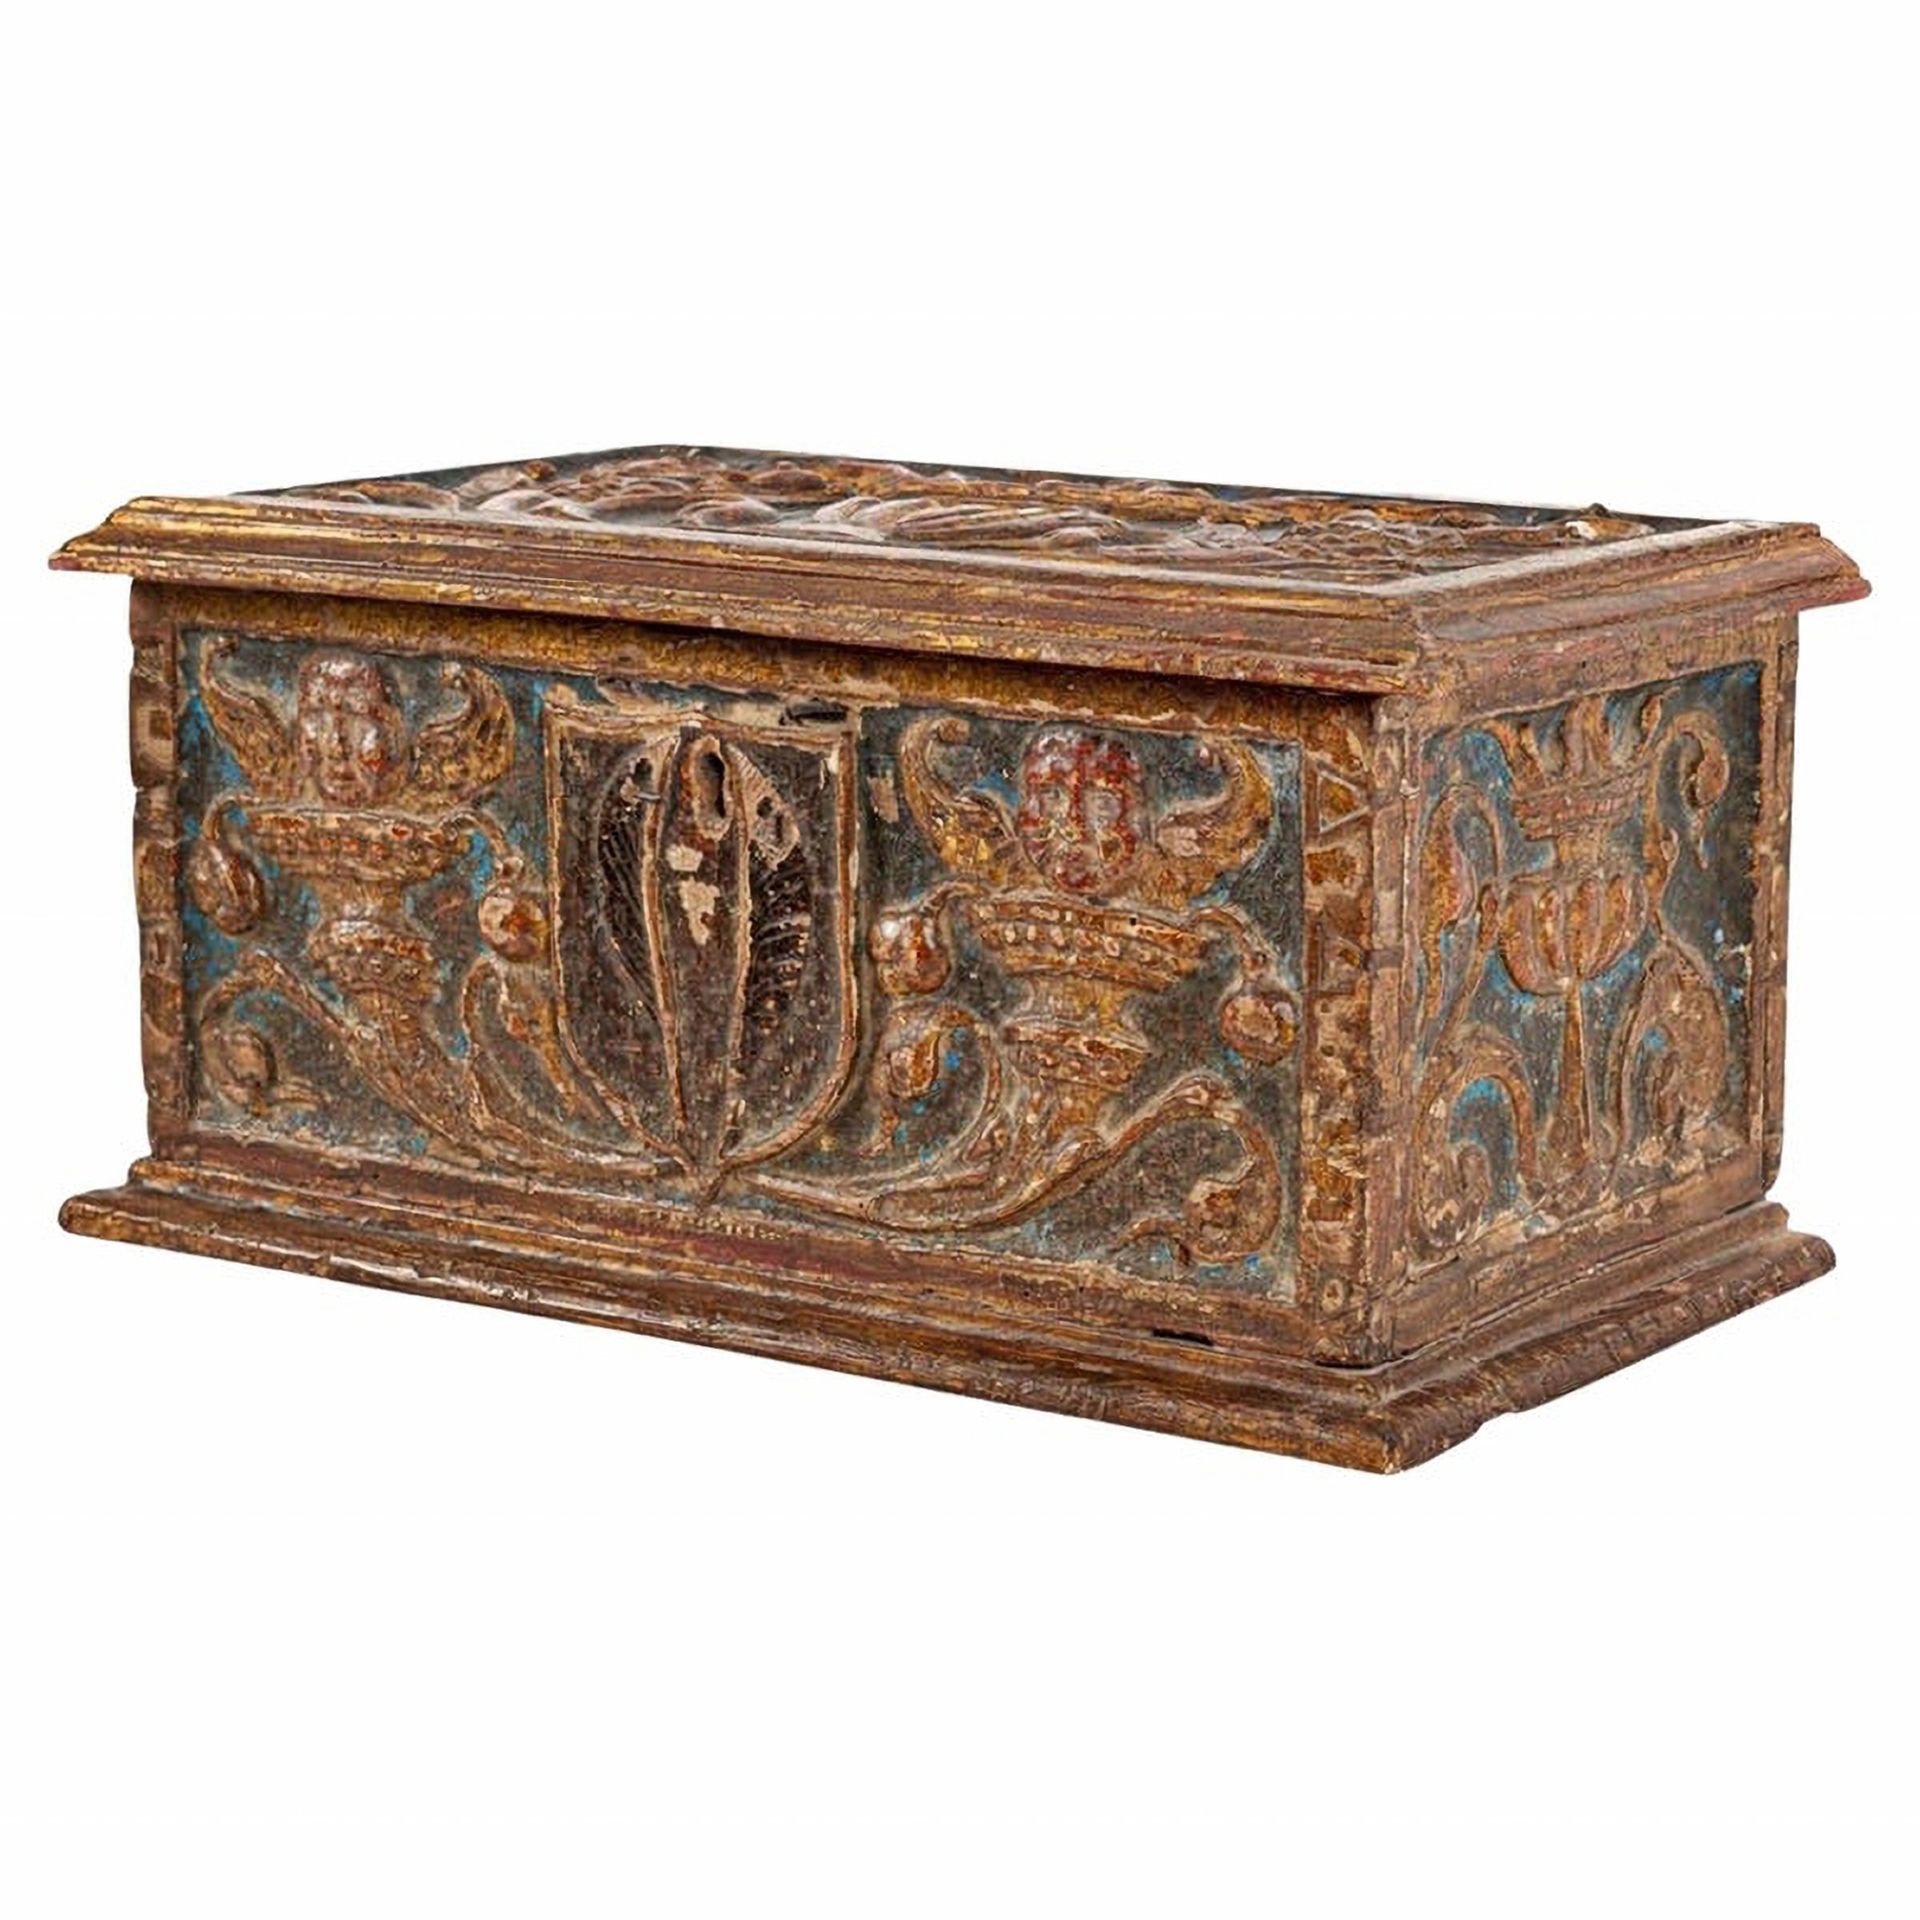 Aragonese Renaissance chest, 16th century